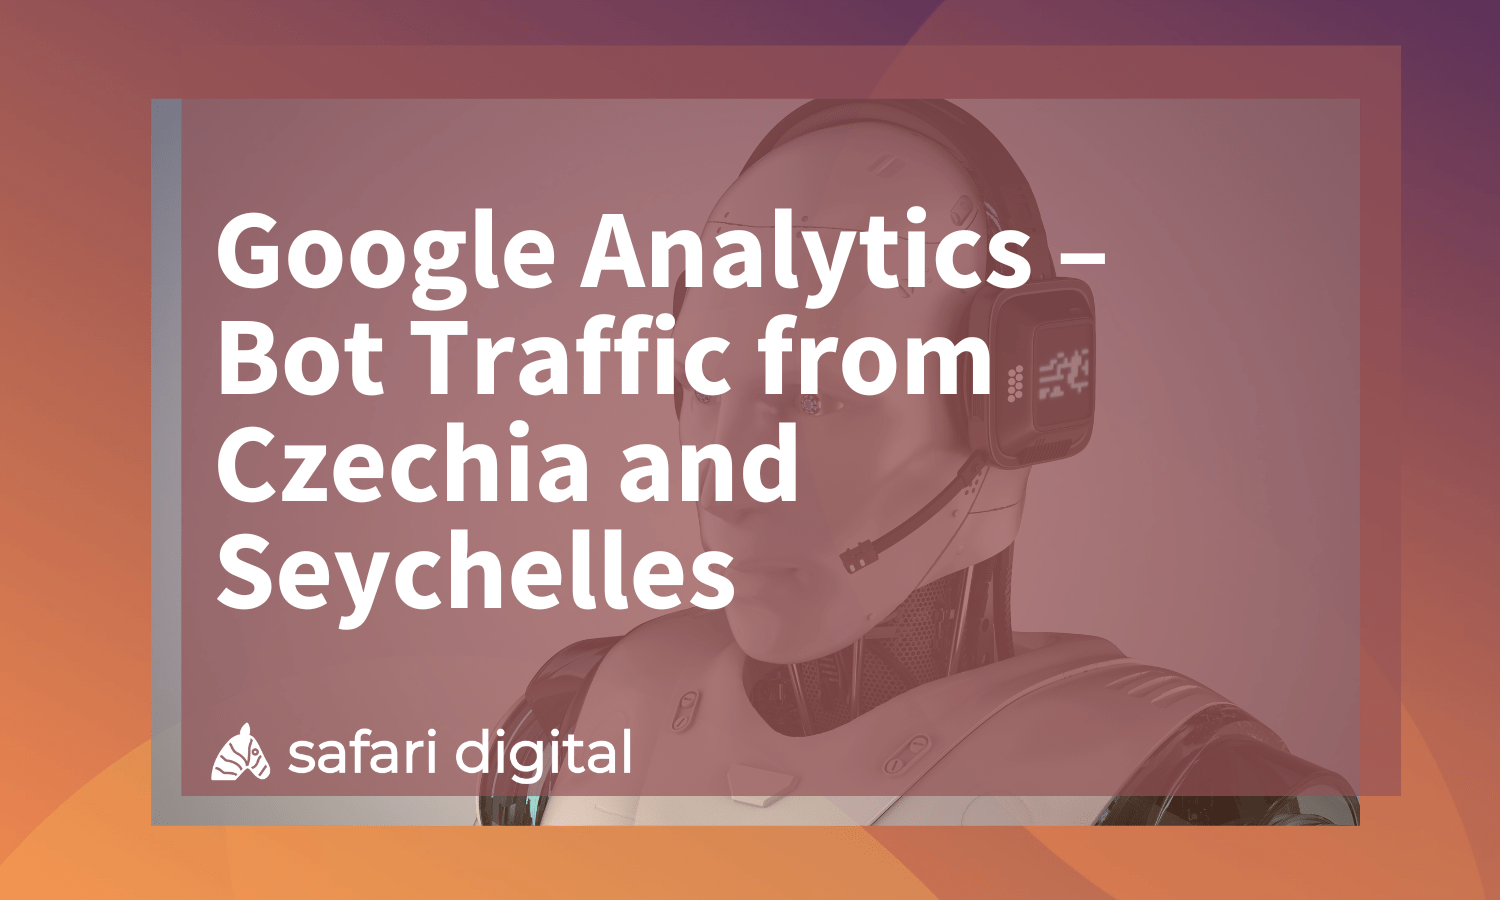 Google Analytics – Bot Traffic from Czechia and Seychelles